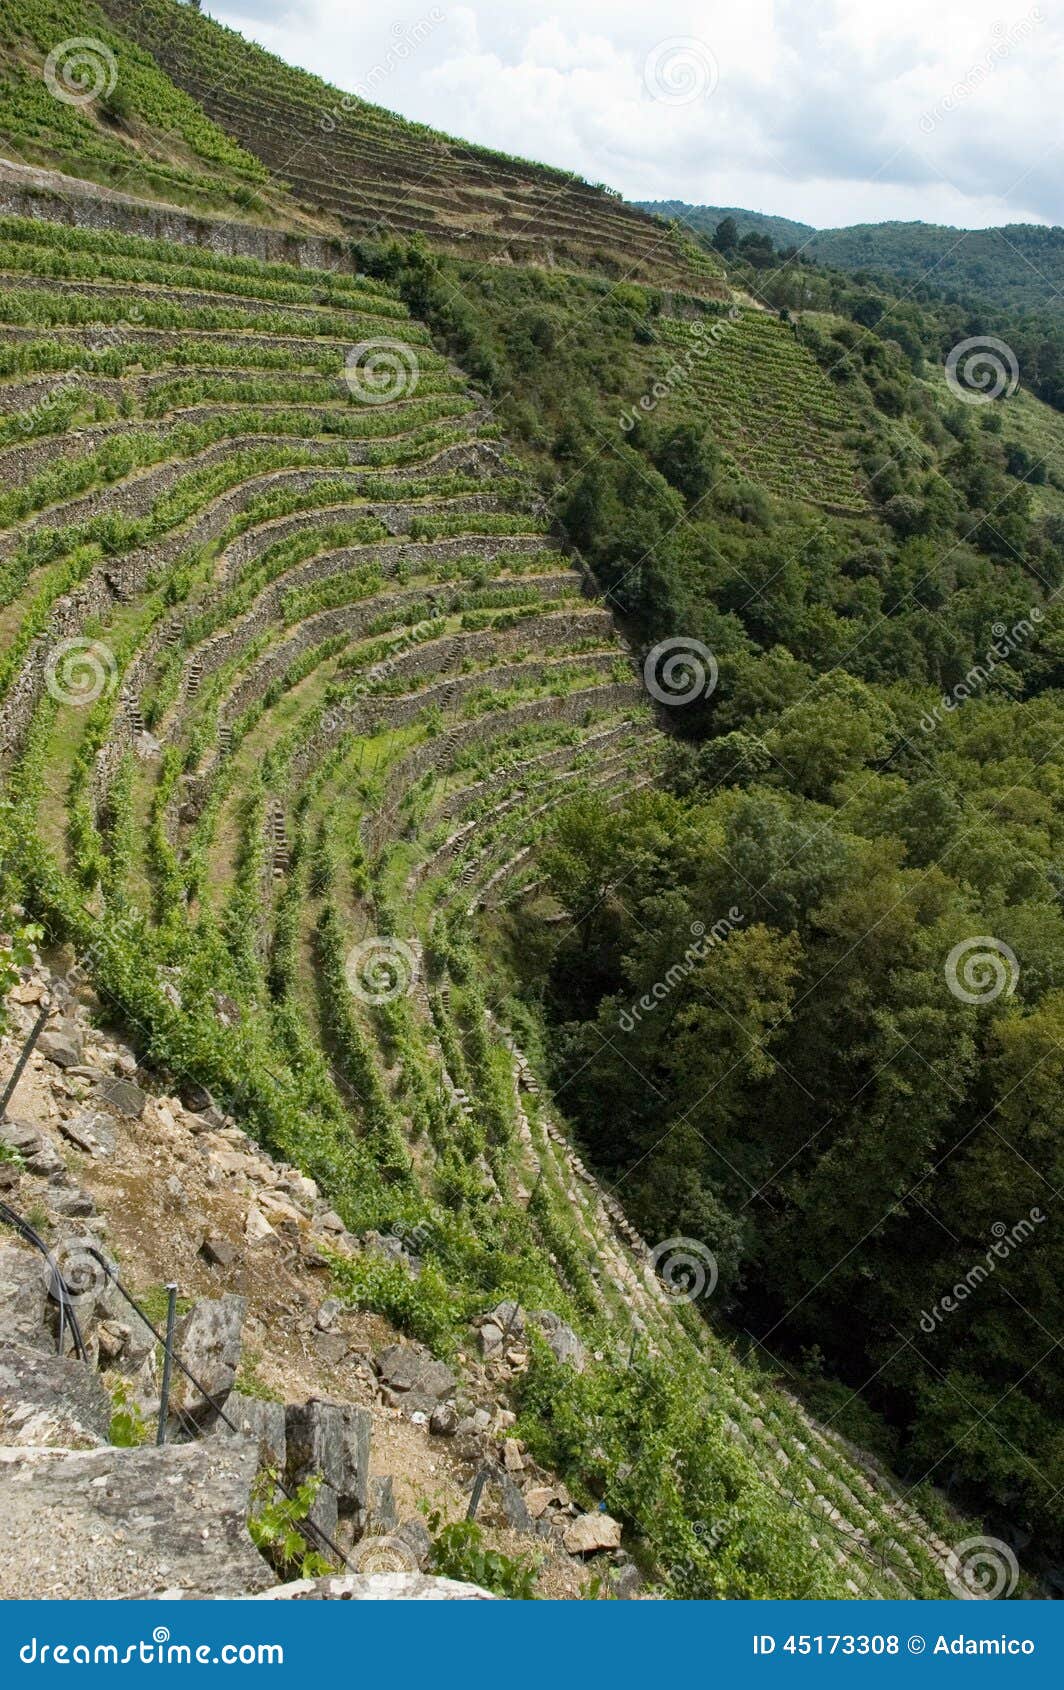 vineyards of ribeira sacra